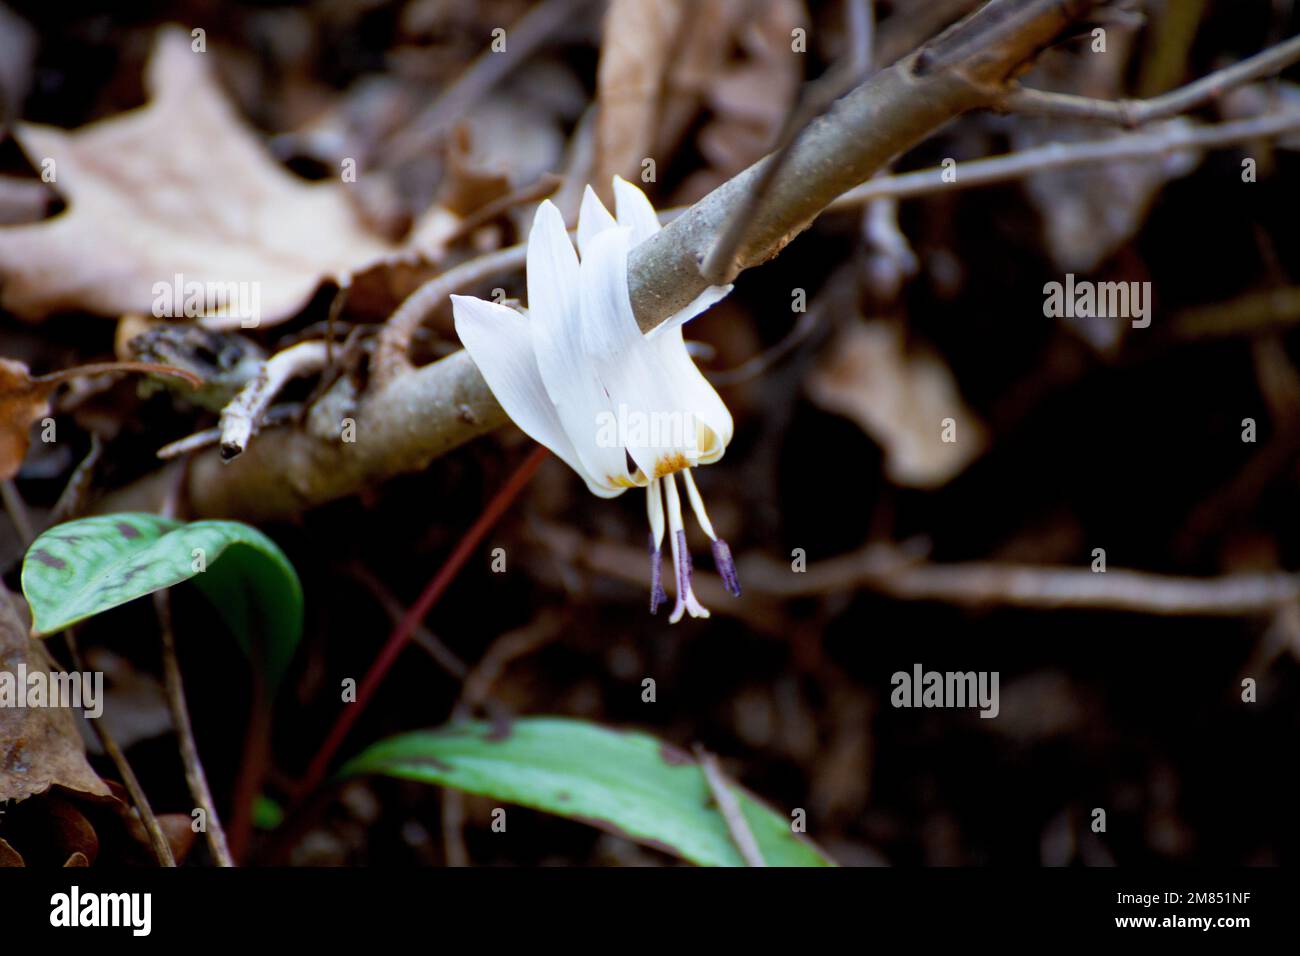 Flowers of the plant Erythronium sibiricum Stock Photo